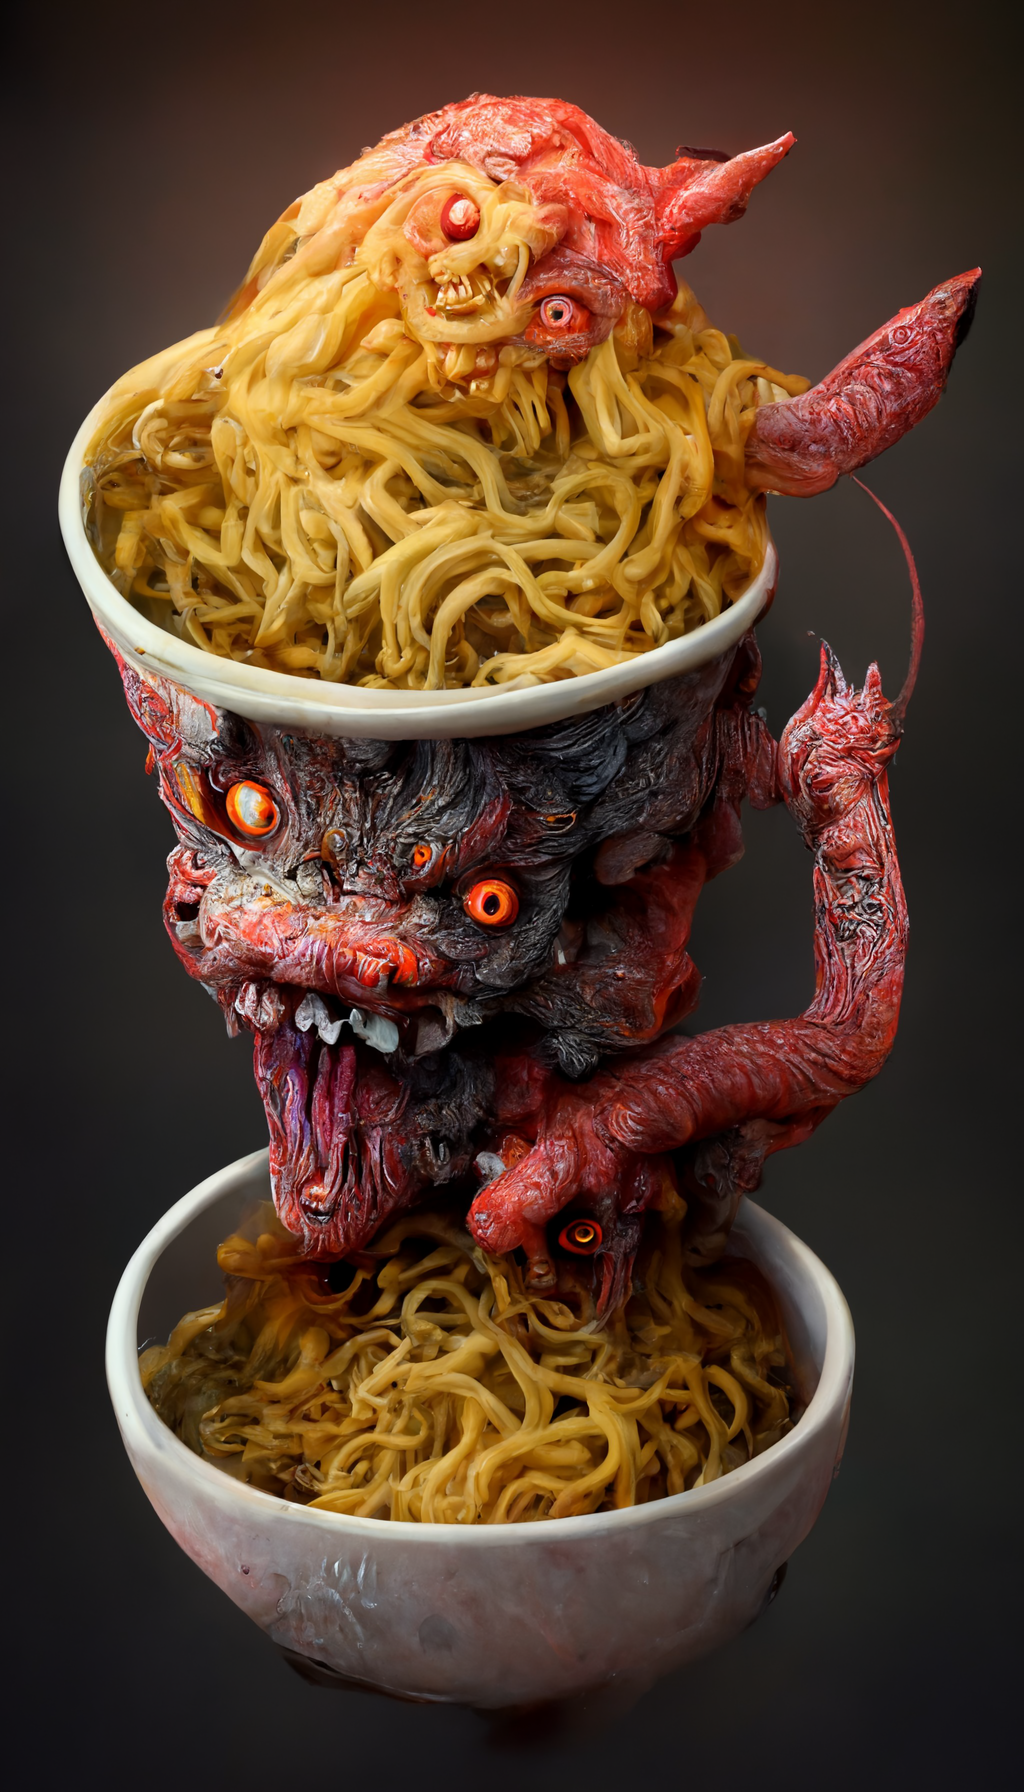 The Ramen Noodles Monster